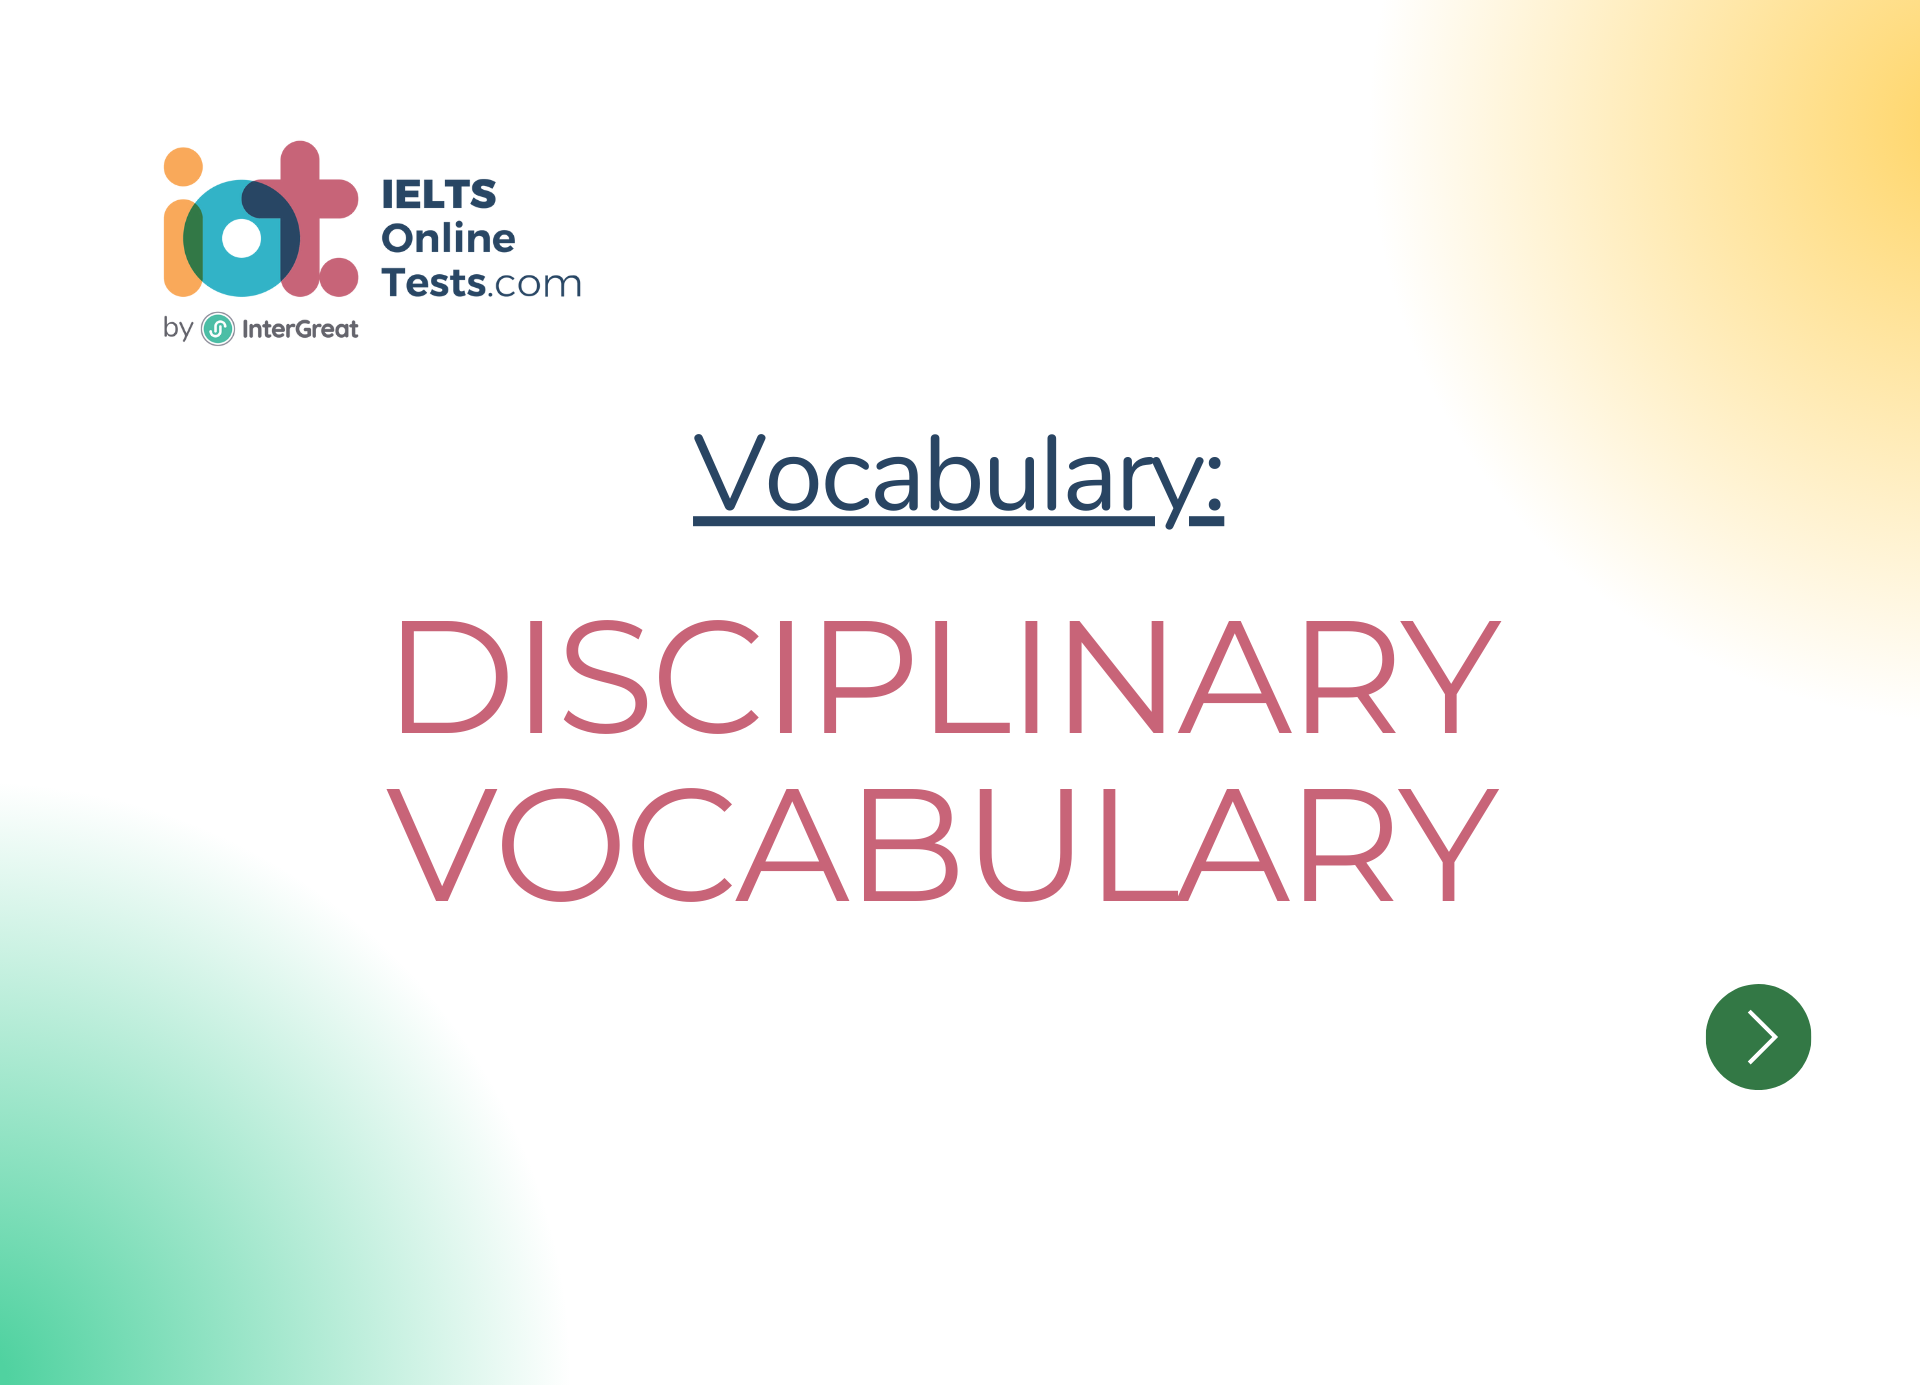 Disciplinary vocabulary